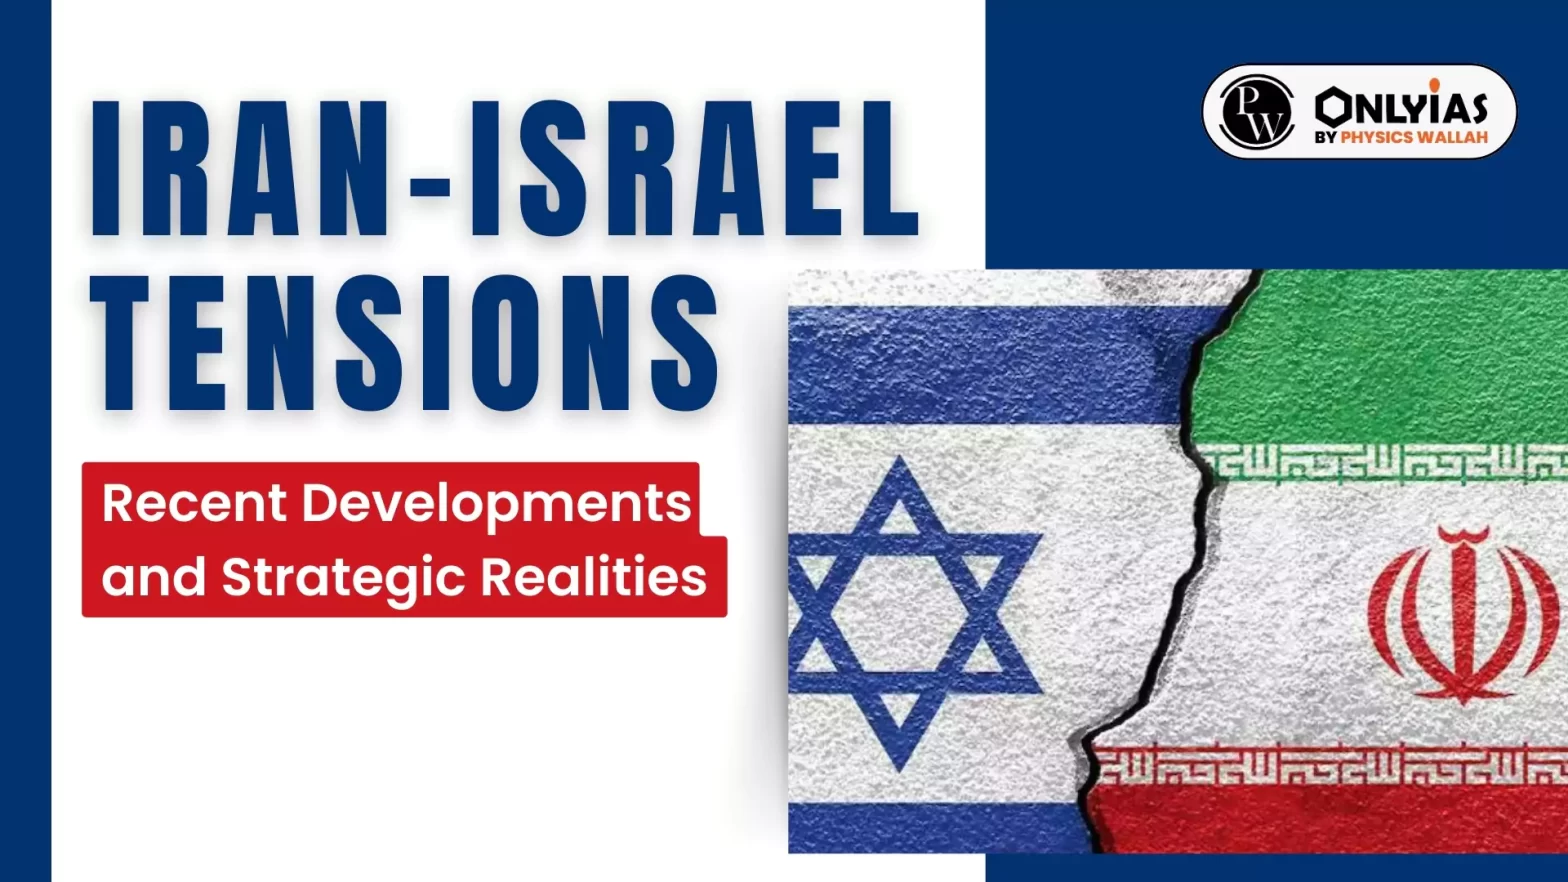 Iran-Israel Tensions: Recent Developments and Strategic Realities